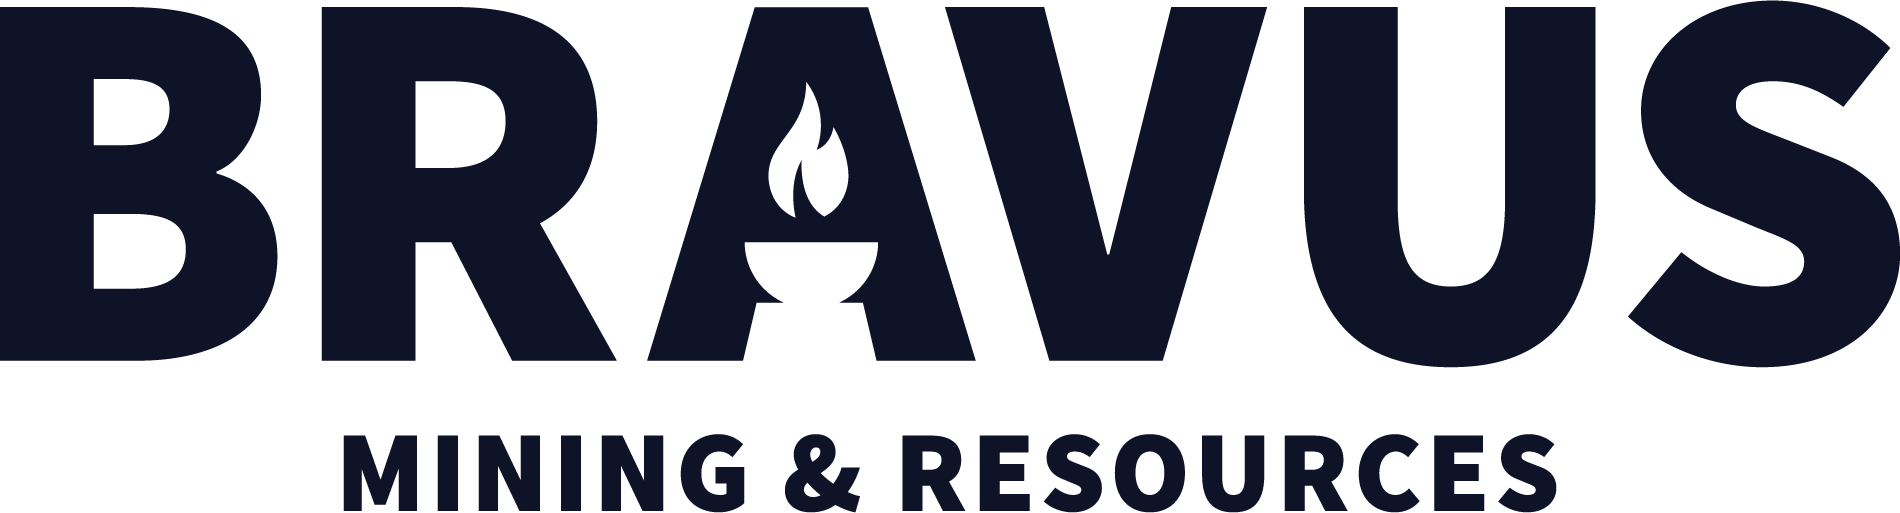 Bravus Mining & Resources